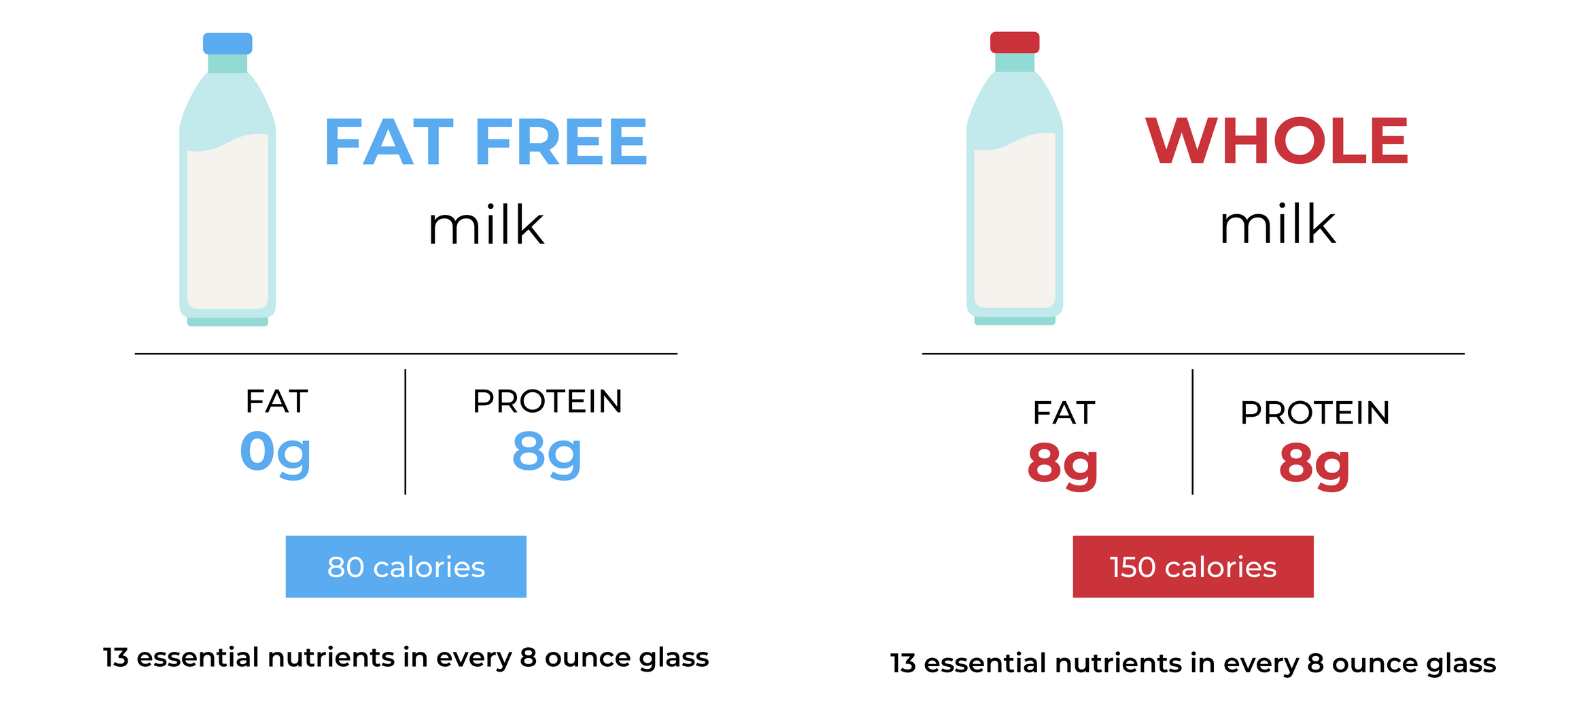 Fat Free Vs. Whole Milk Nutrition Graphic 